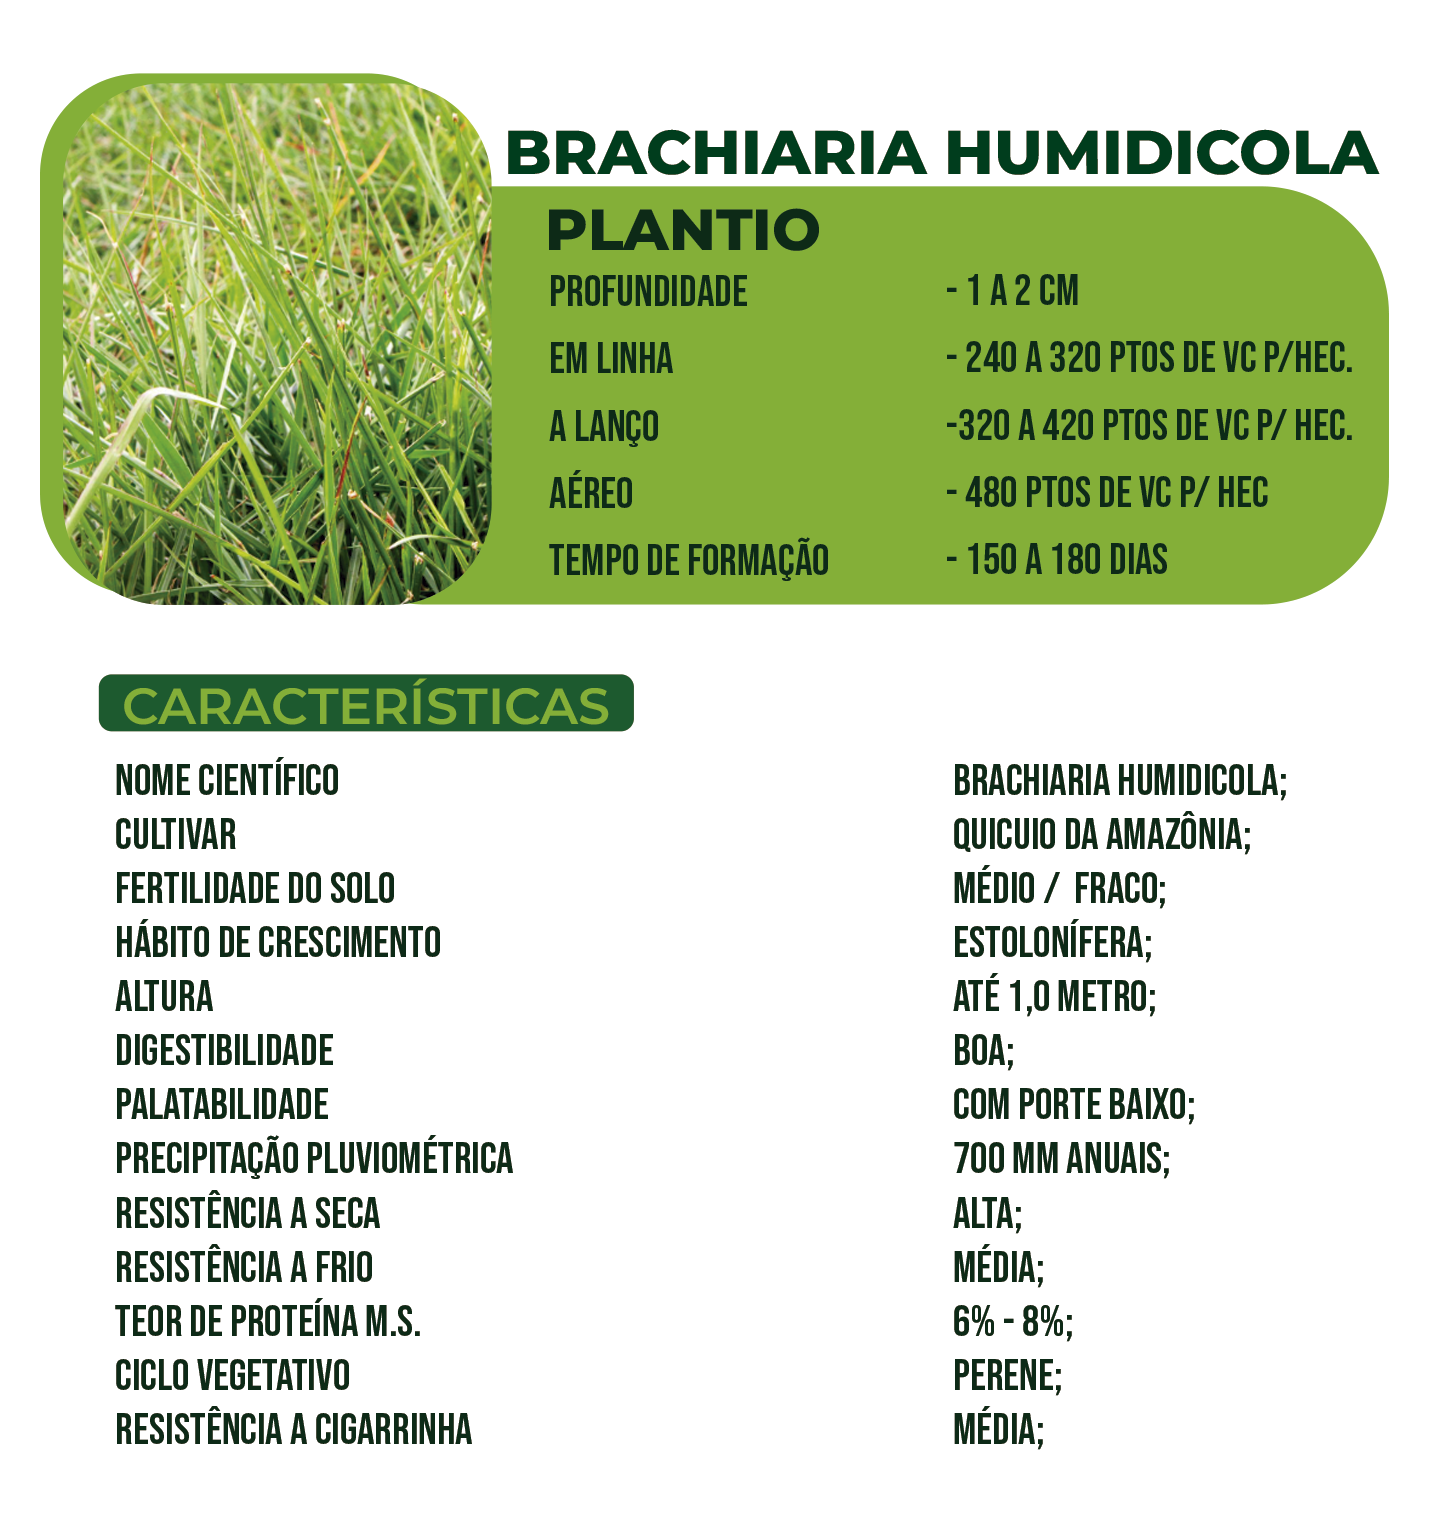 Brachiaria Humidicola